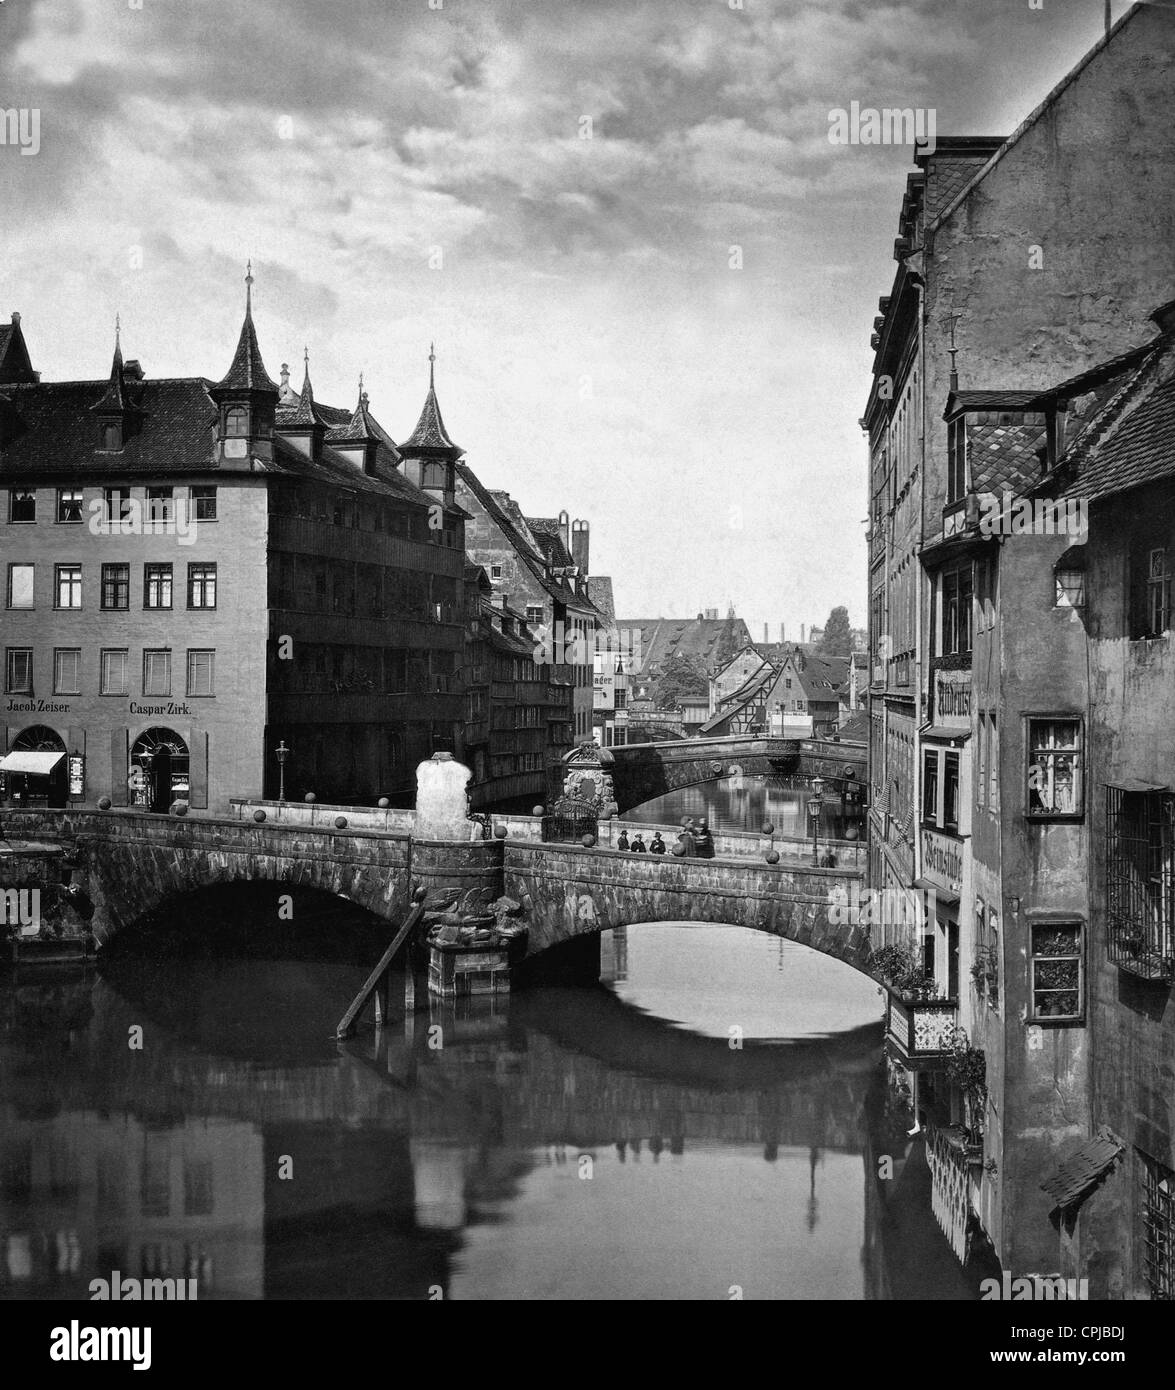 King's Bridge in Nuremberg Stock Photo